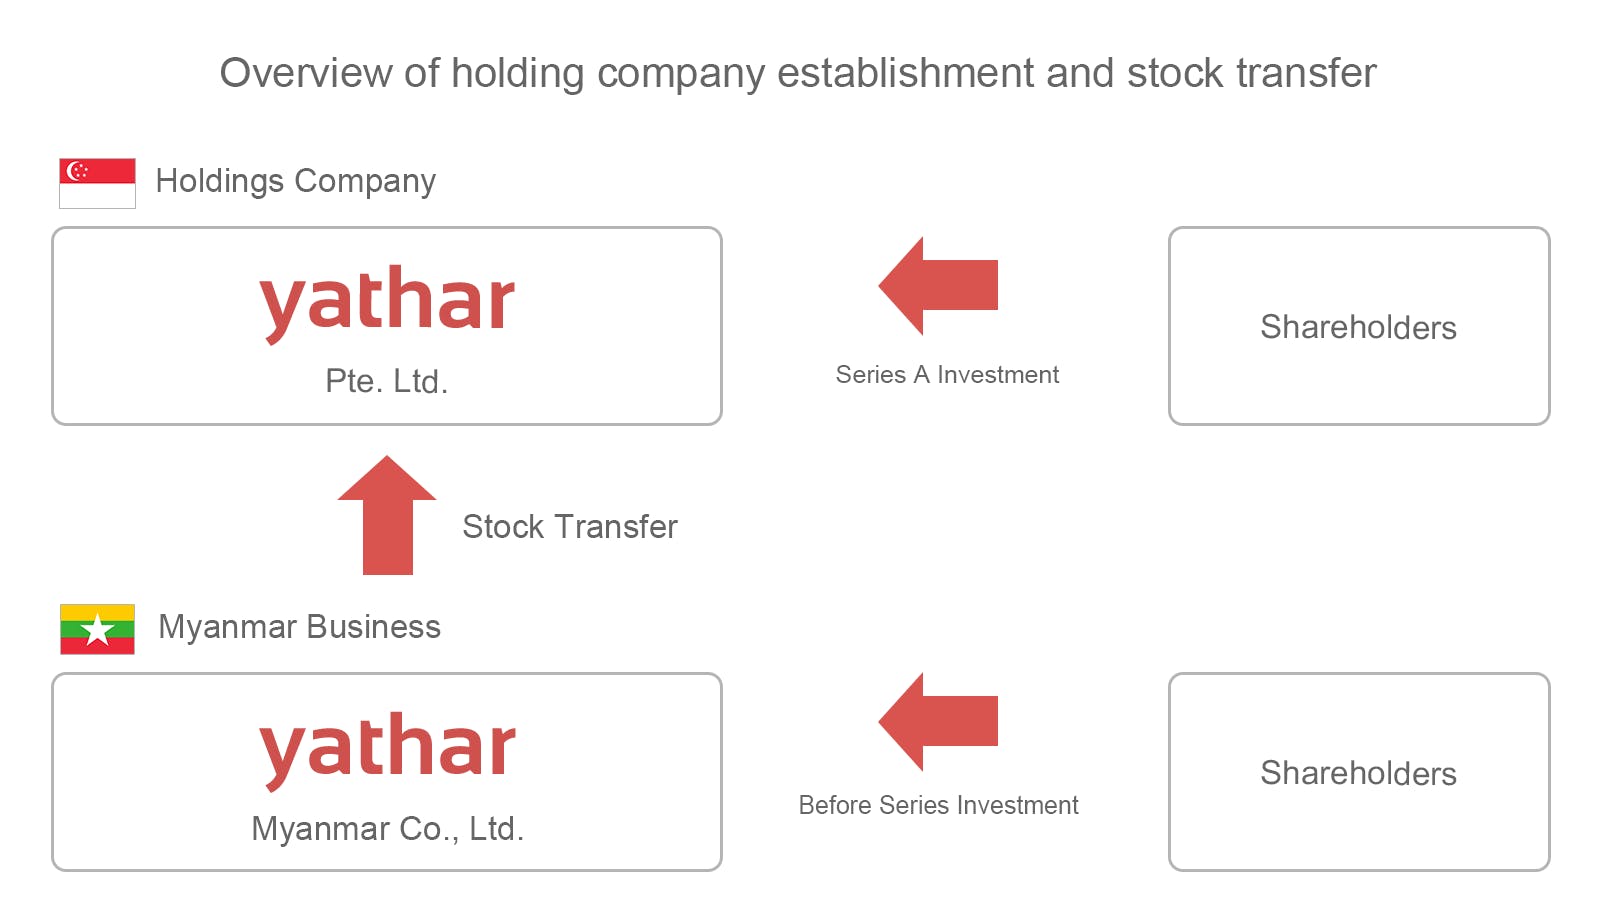 Holding company establishment and transfer of shares